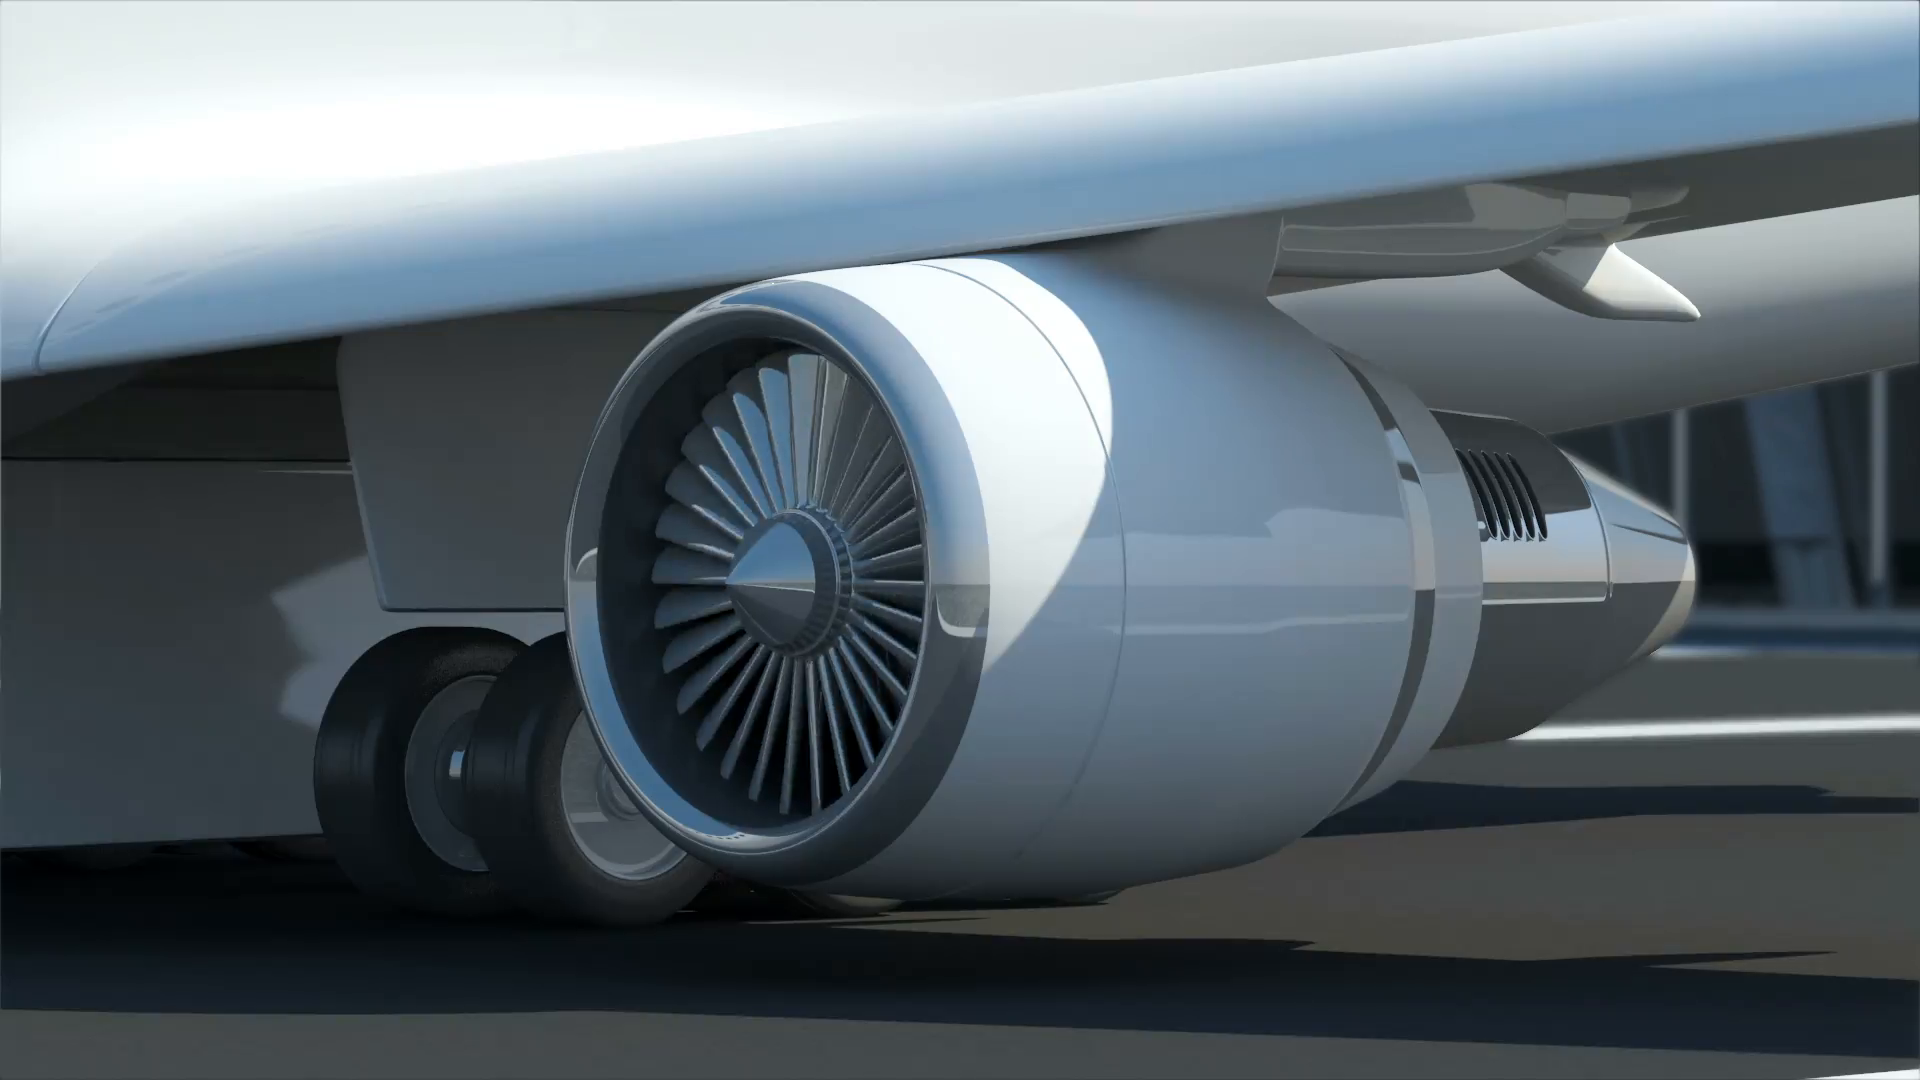 Seamless Looping Animation of Airplane Turbine Engine. Passenger ...